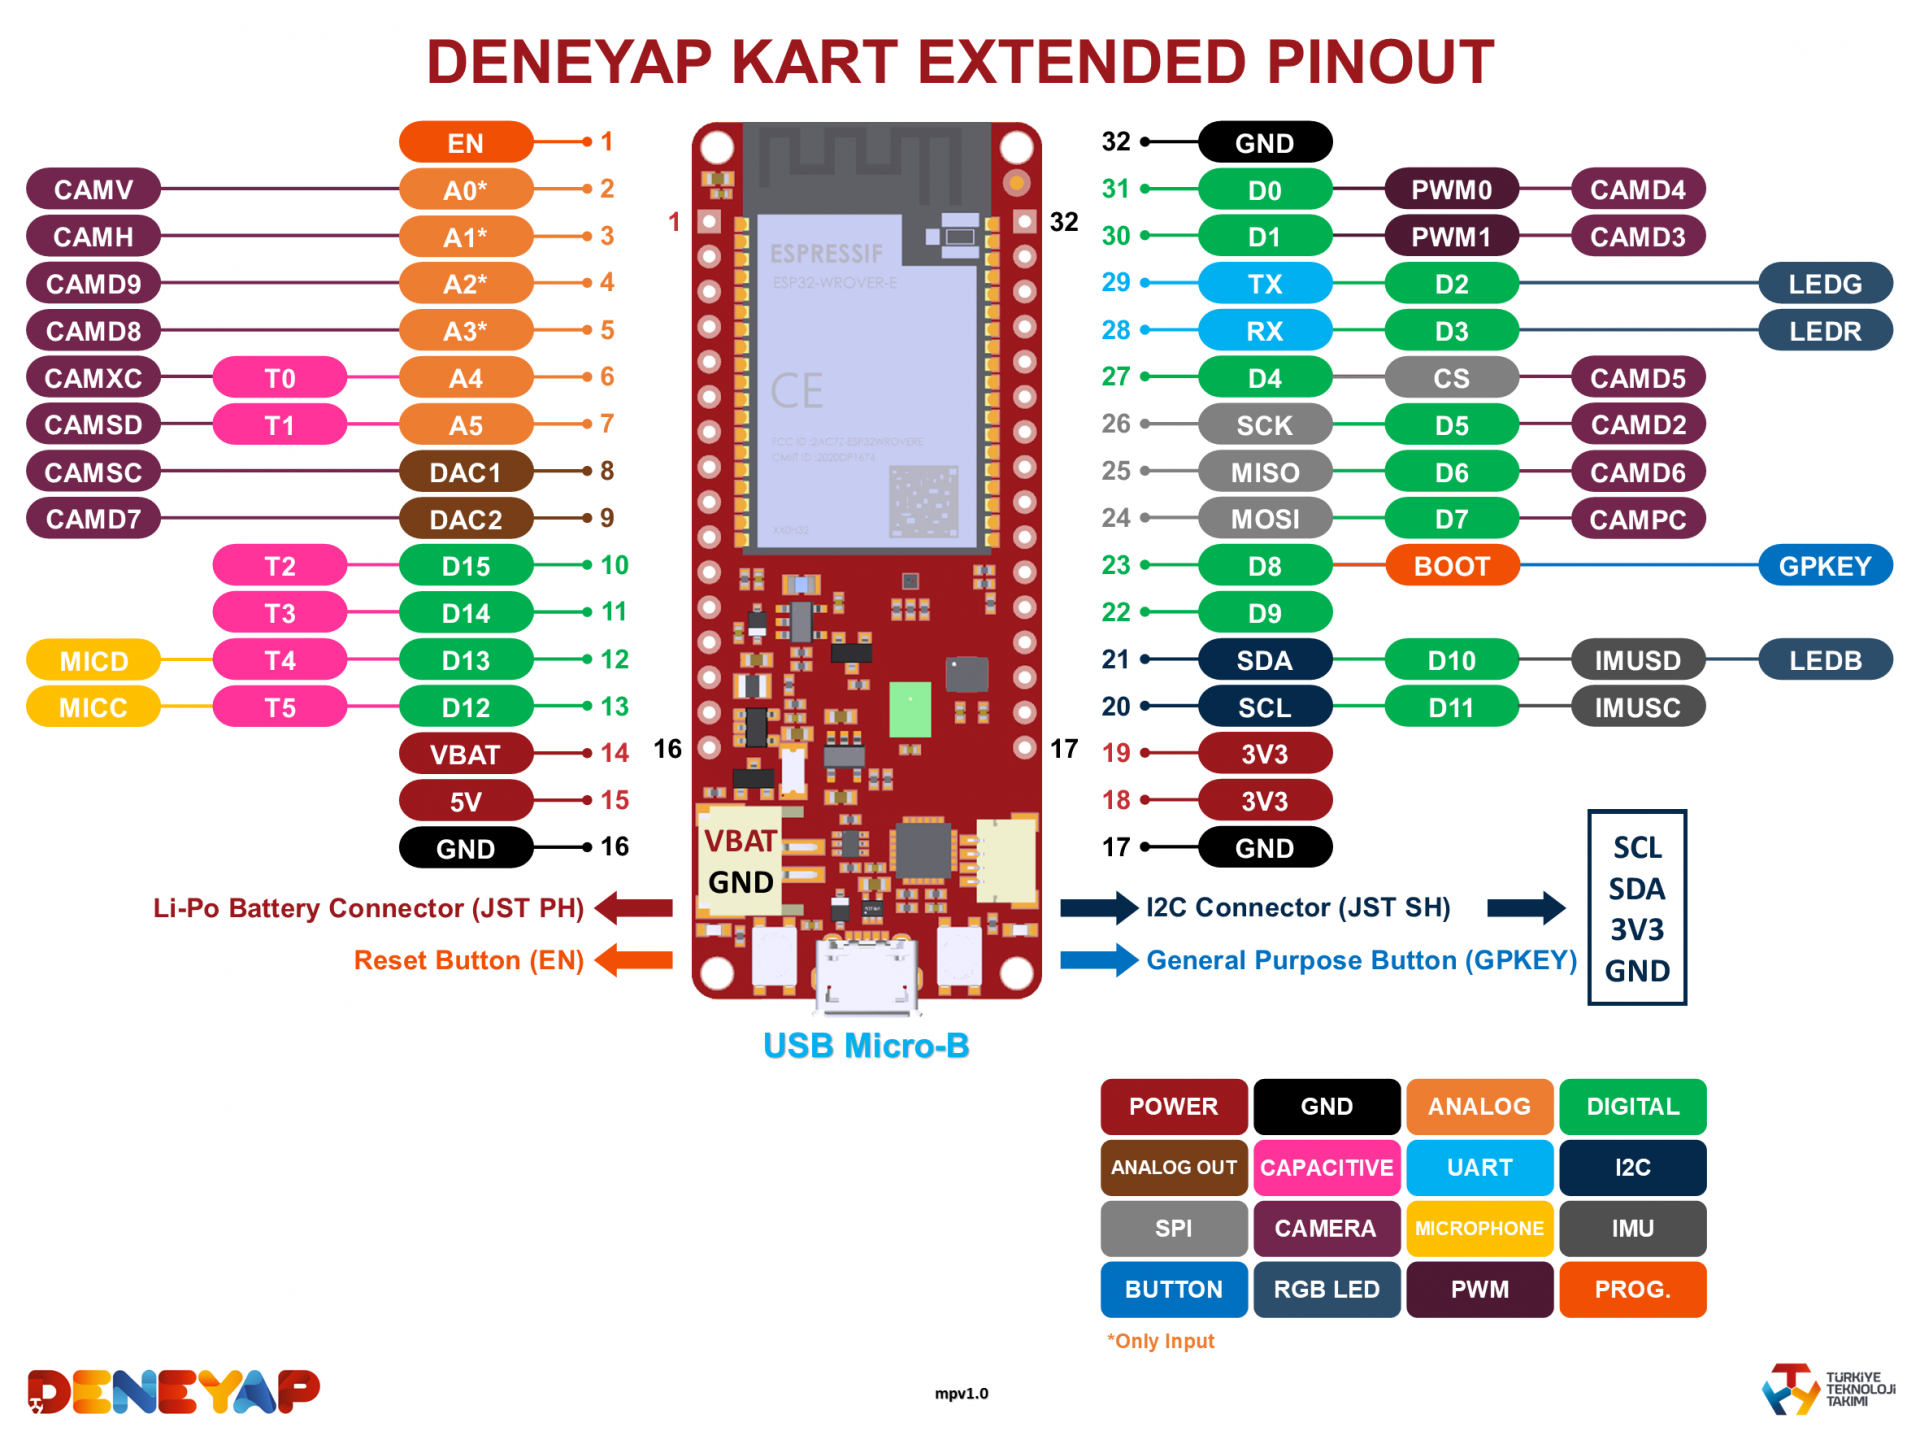 DeneyapKart_ExtendedPinOutEng_mpv1.0.png